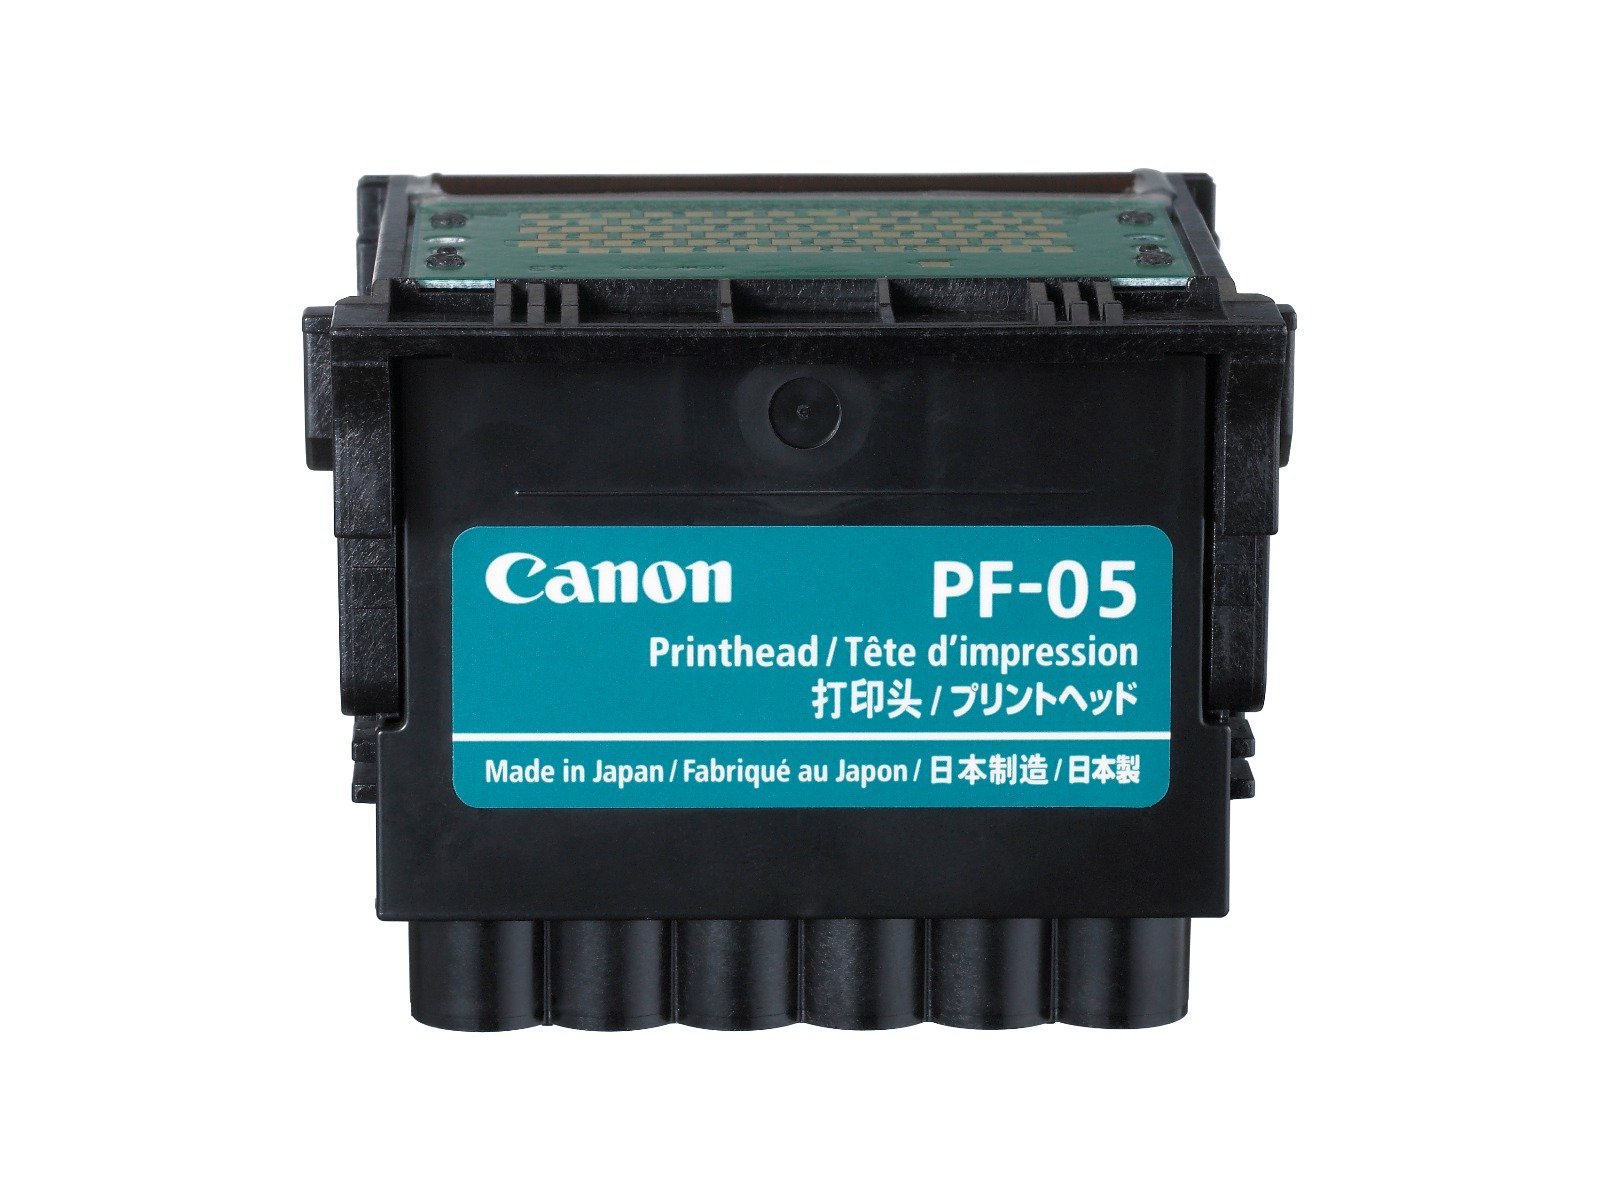 Печатающая головка Canon PF-05 печатающая головка 774 designjet matte black